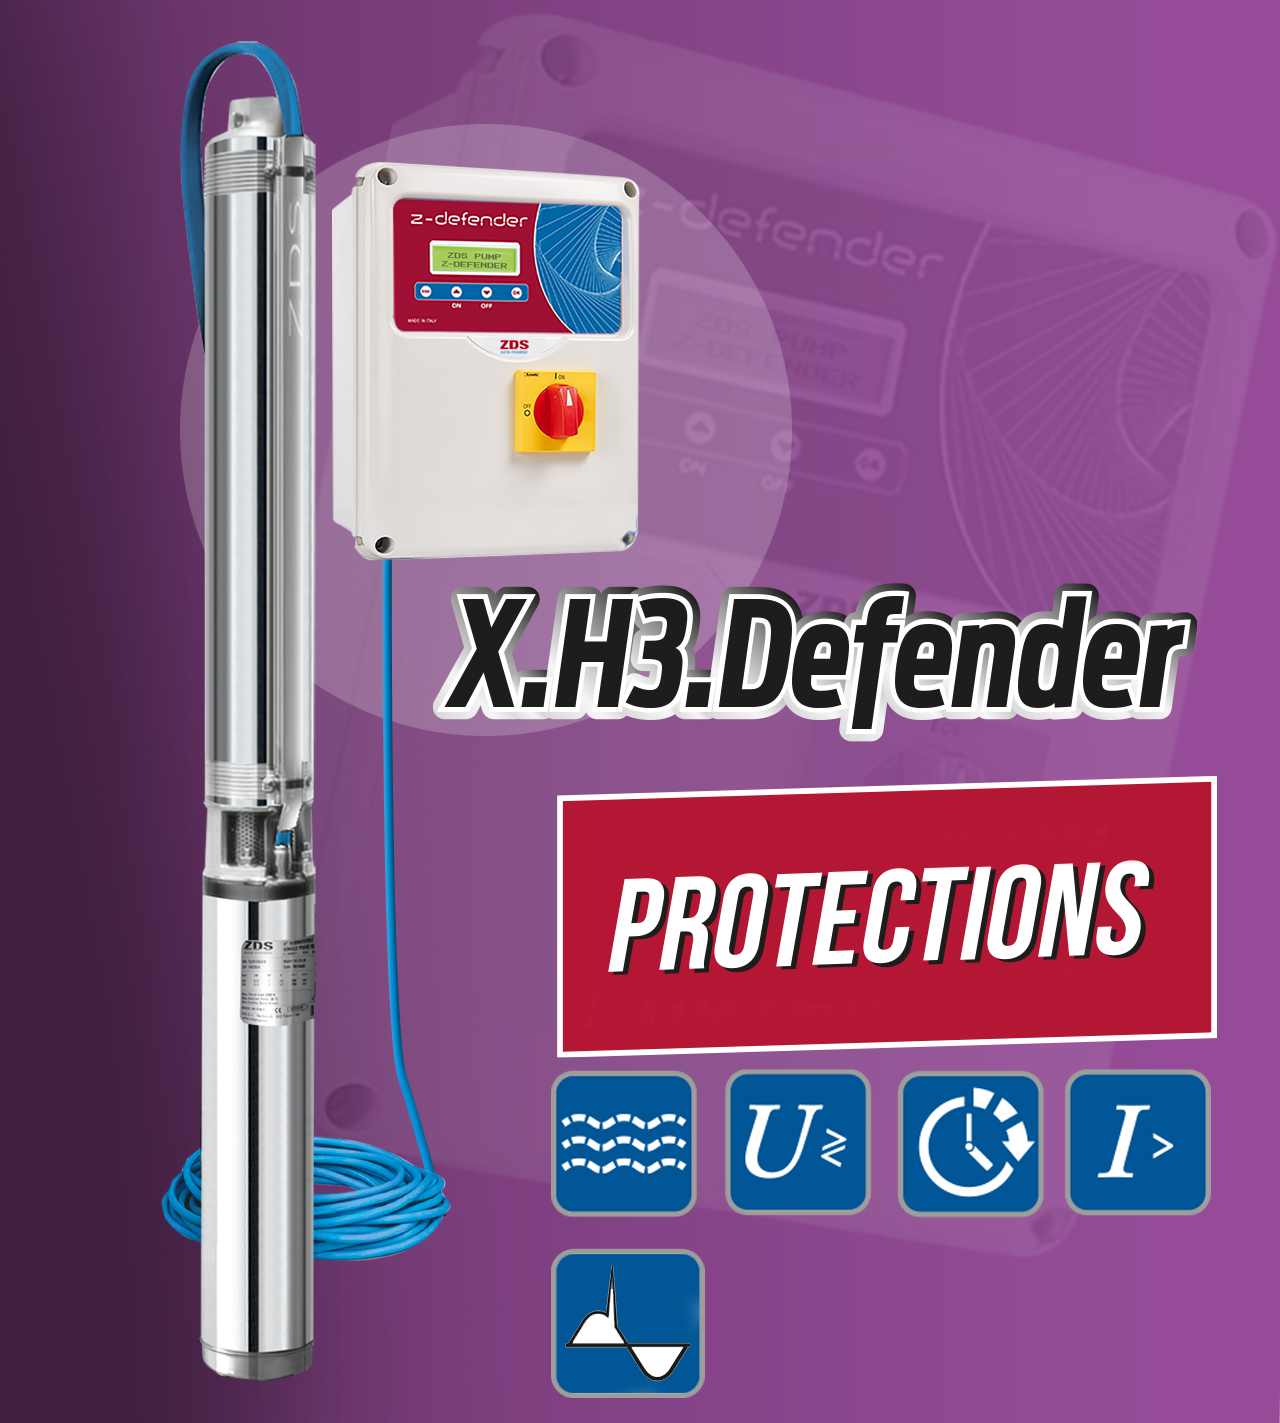 X.H3.Defender